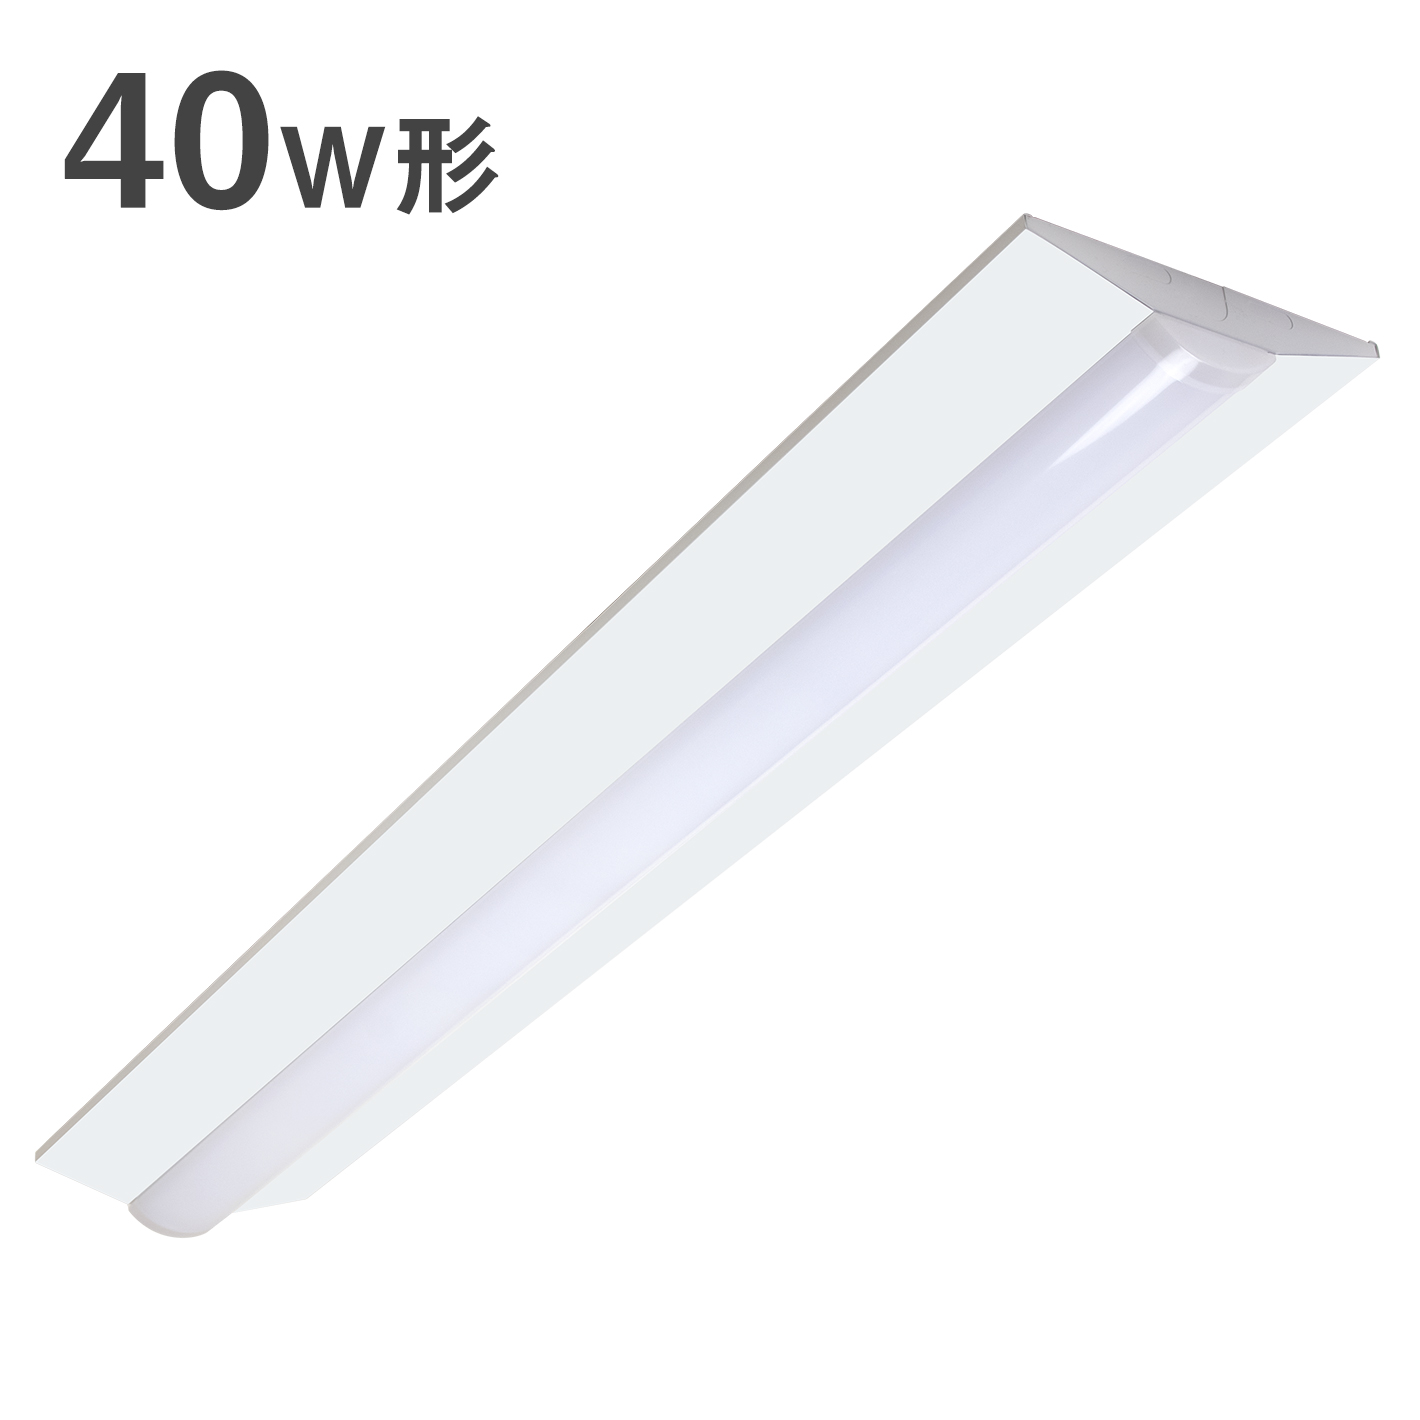 共同照明 逆富士型 LEDベースライト 40W形 2灯相当 昼白色 4200lm 直管LED 器具一体型 - 共同照明LED専門店